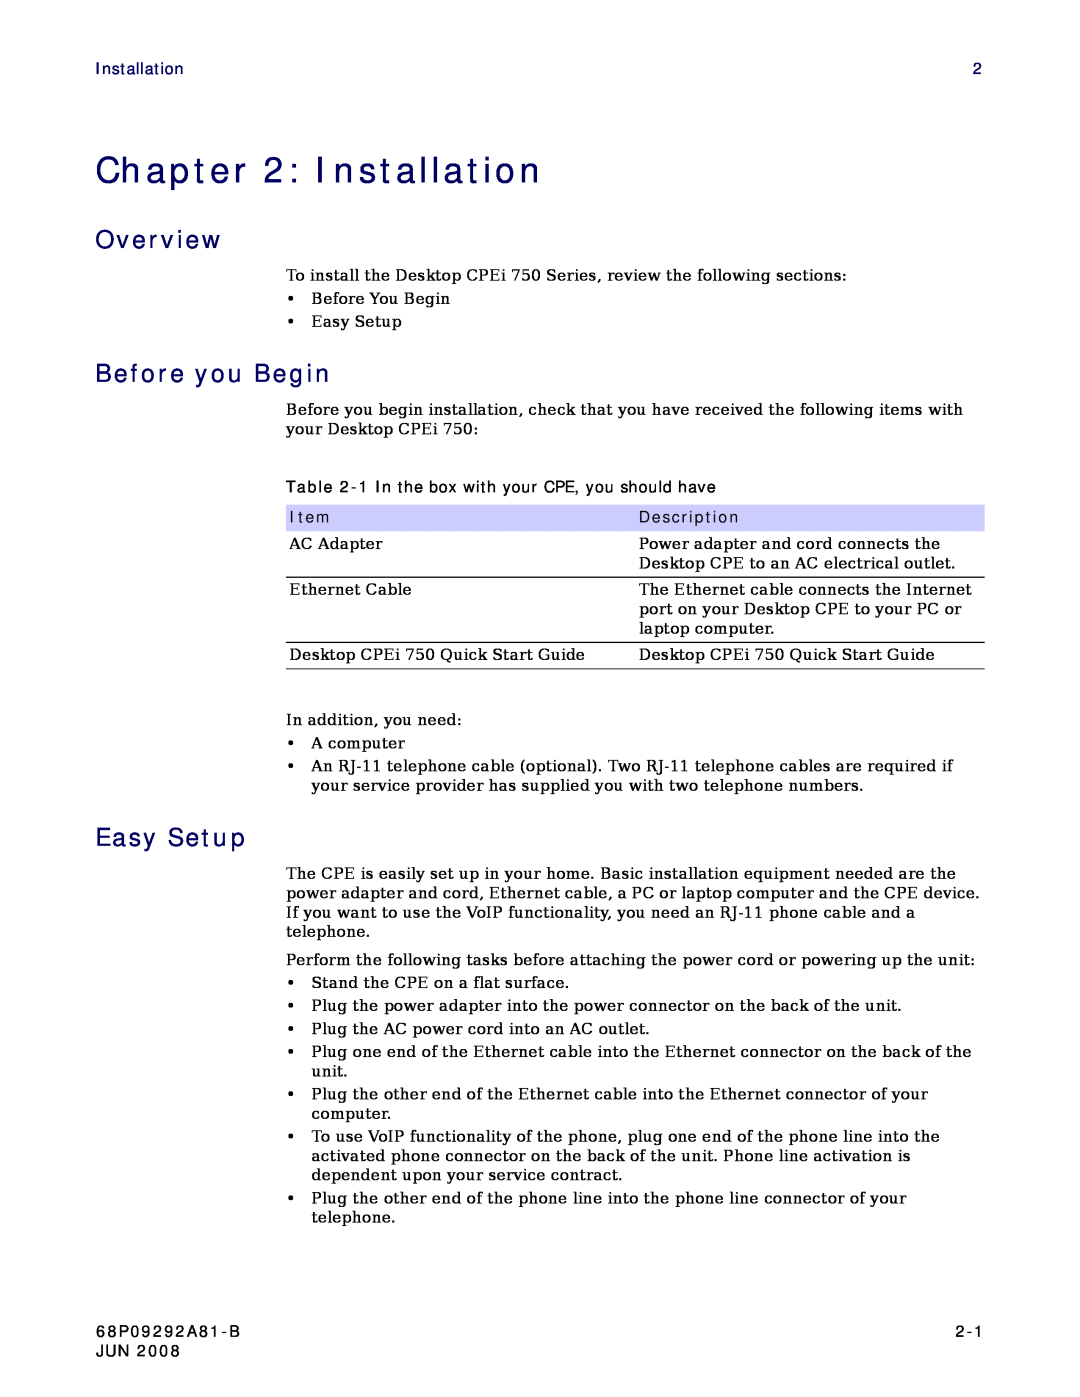 Motorola CPEI 750 manual Installation, Before you Begin, Easy Setup, Description, Overview, 68P09292A81-B 